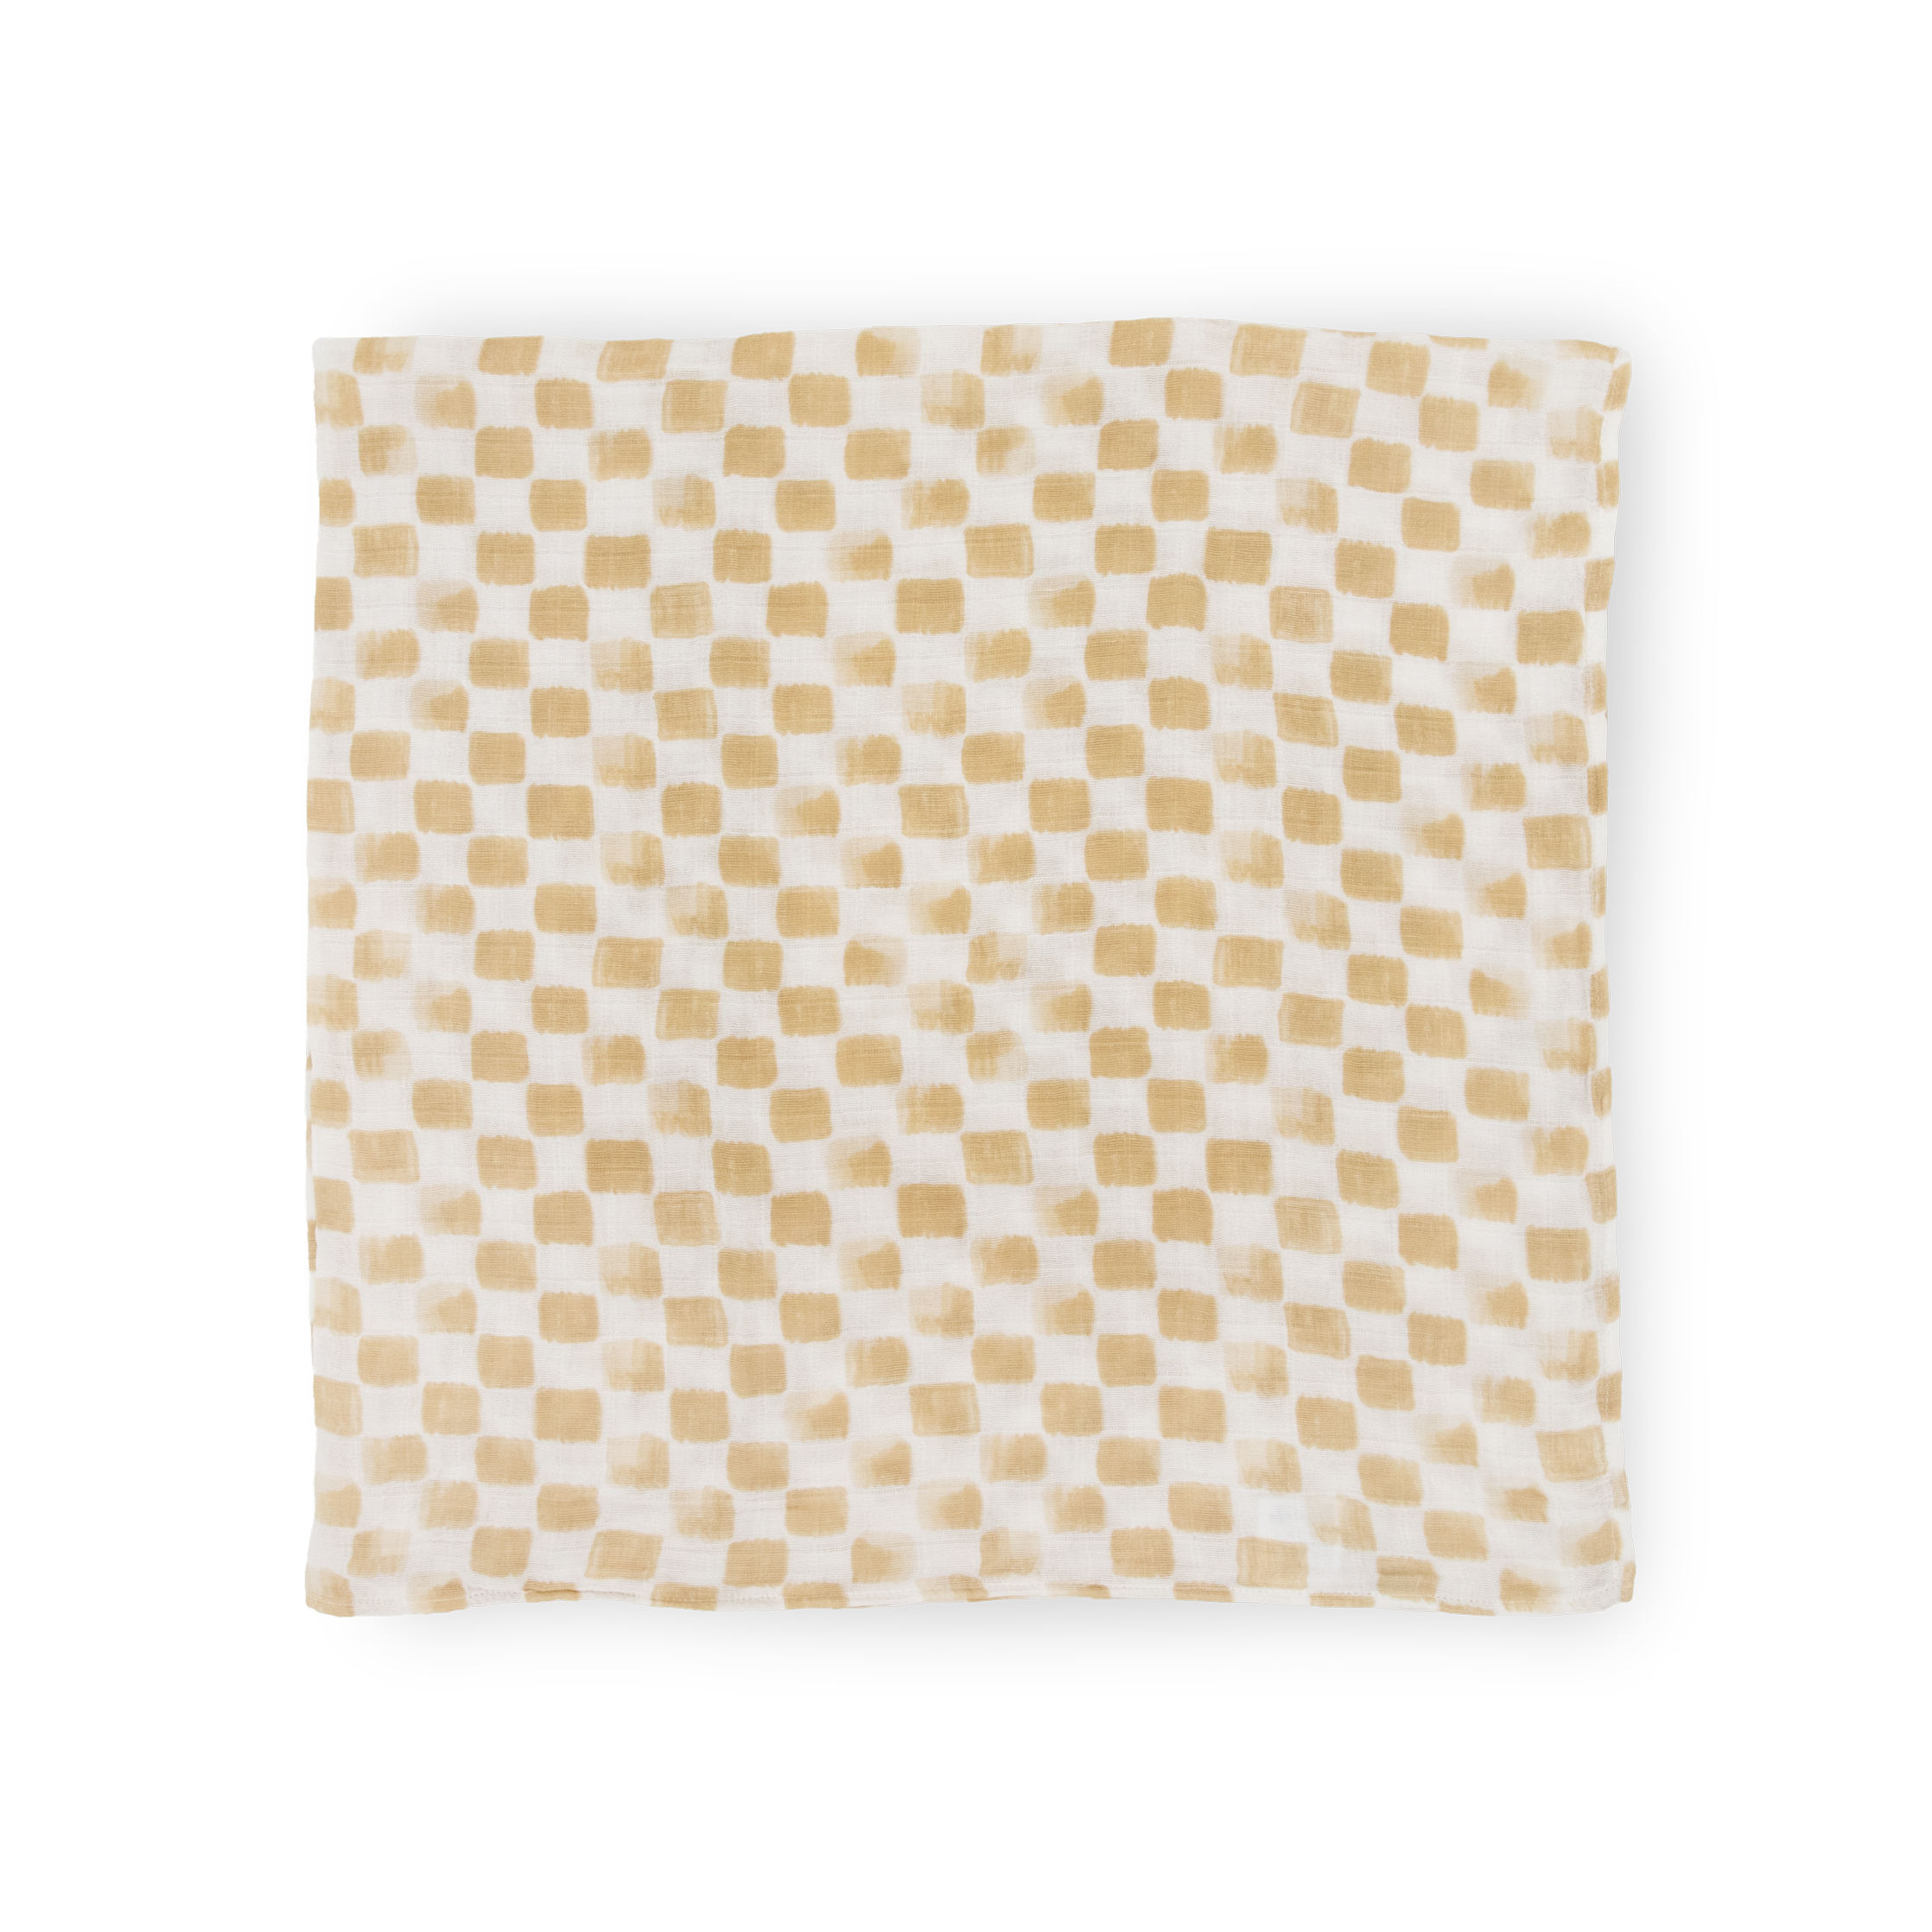 Cotton Muslin Swaddle Blanket 3 Pack - Desert Night